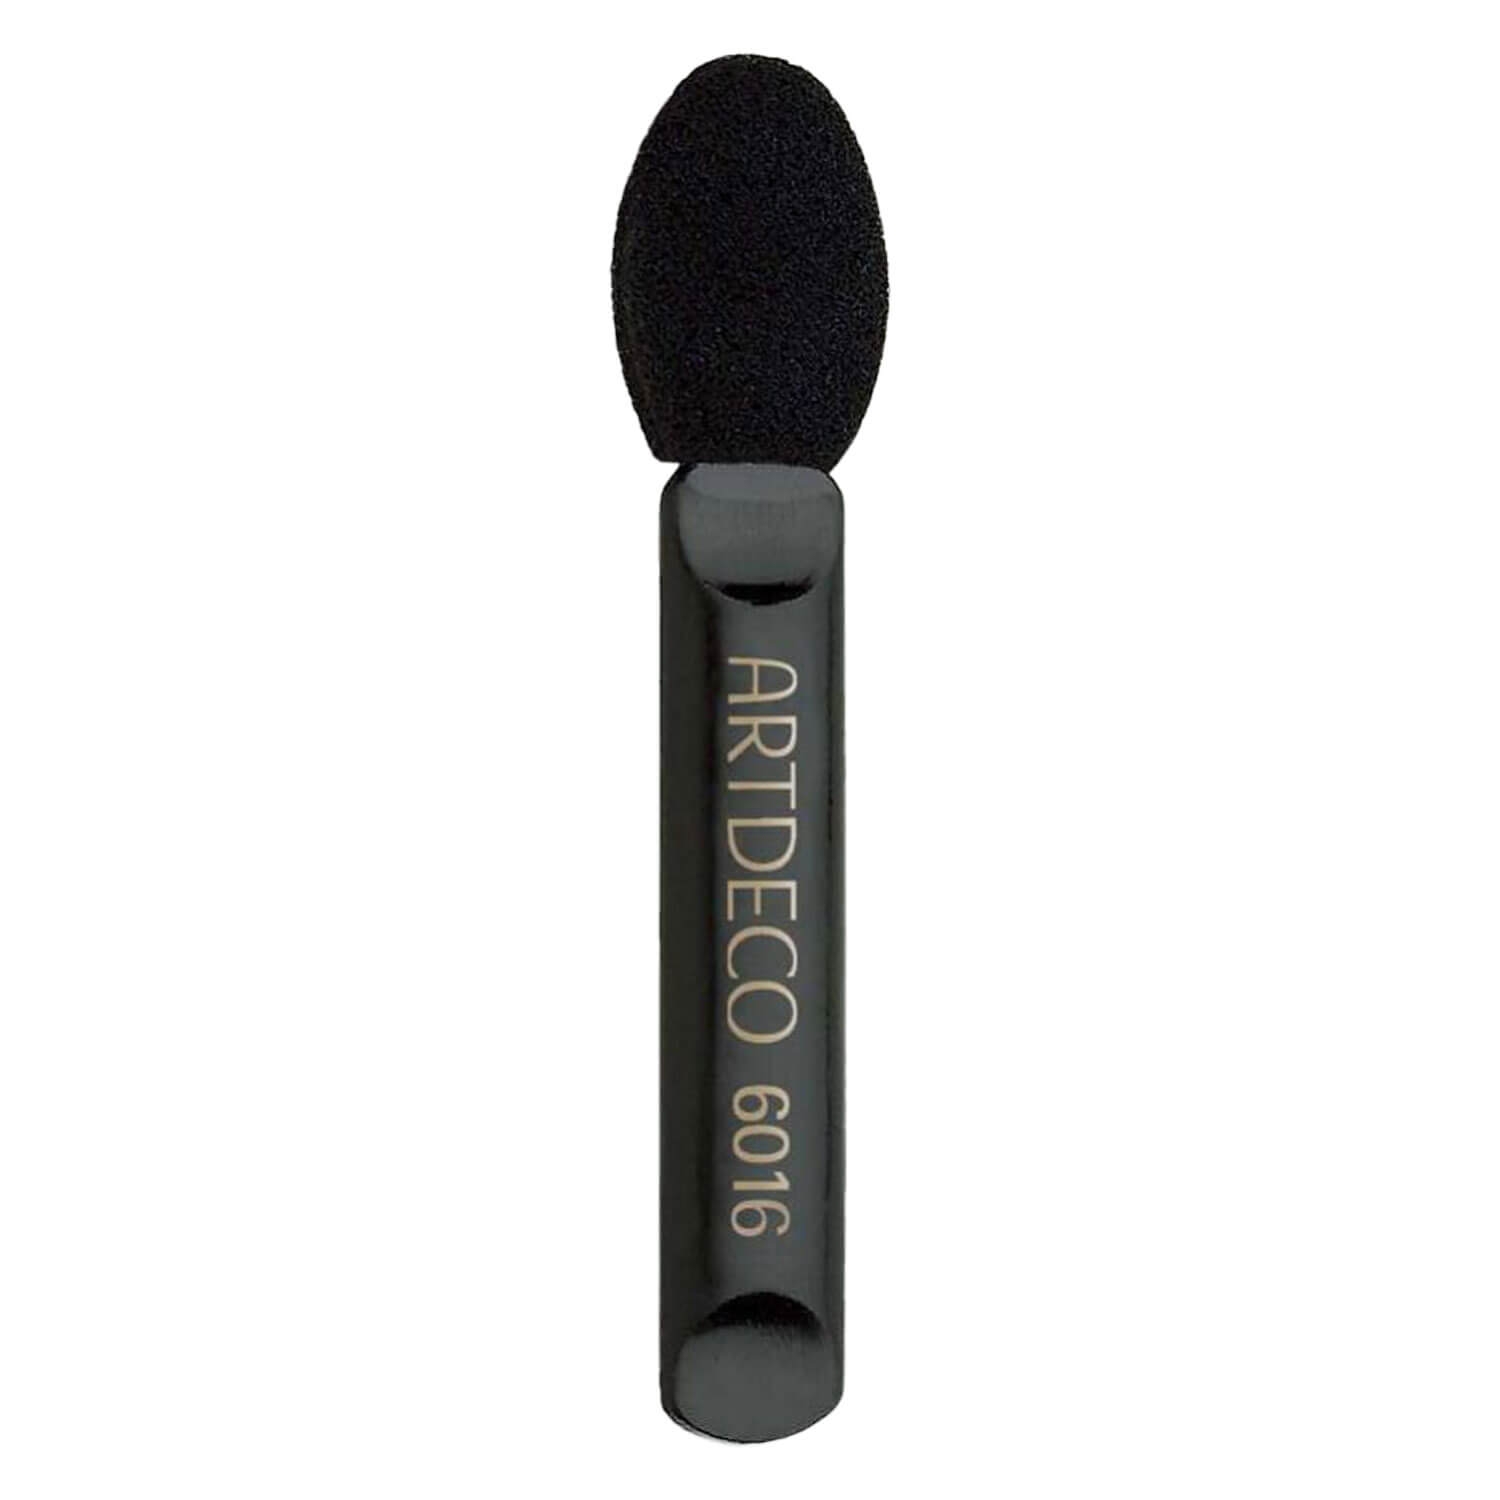 Produktbild von Artdeco Tools - Eyeshadow Applicator for Beauty Box